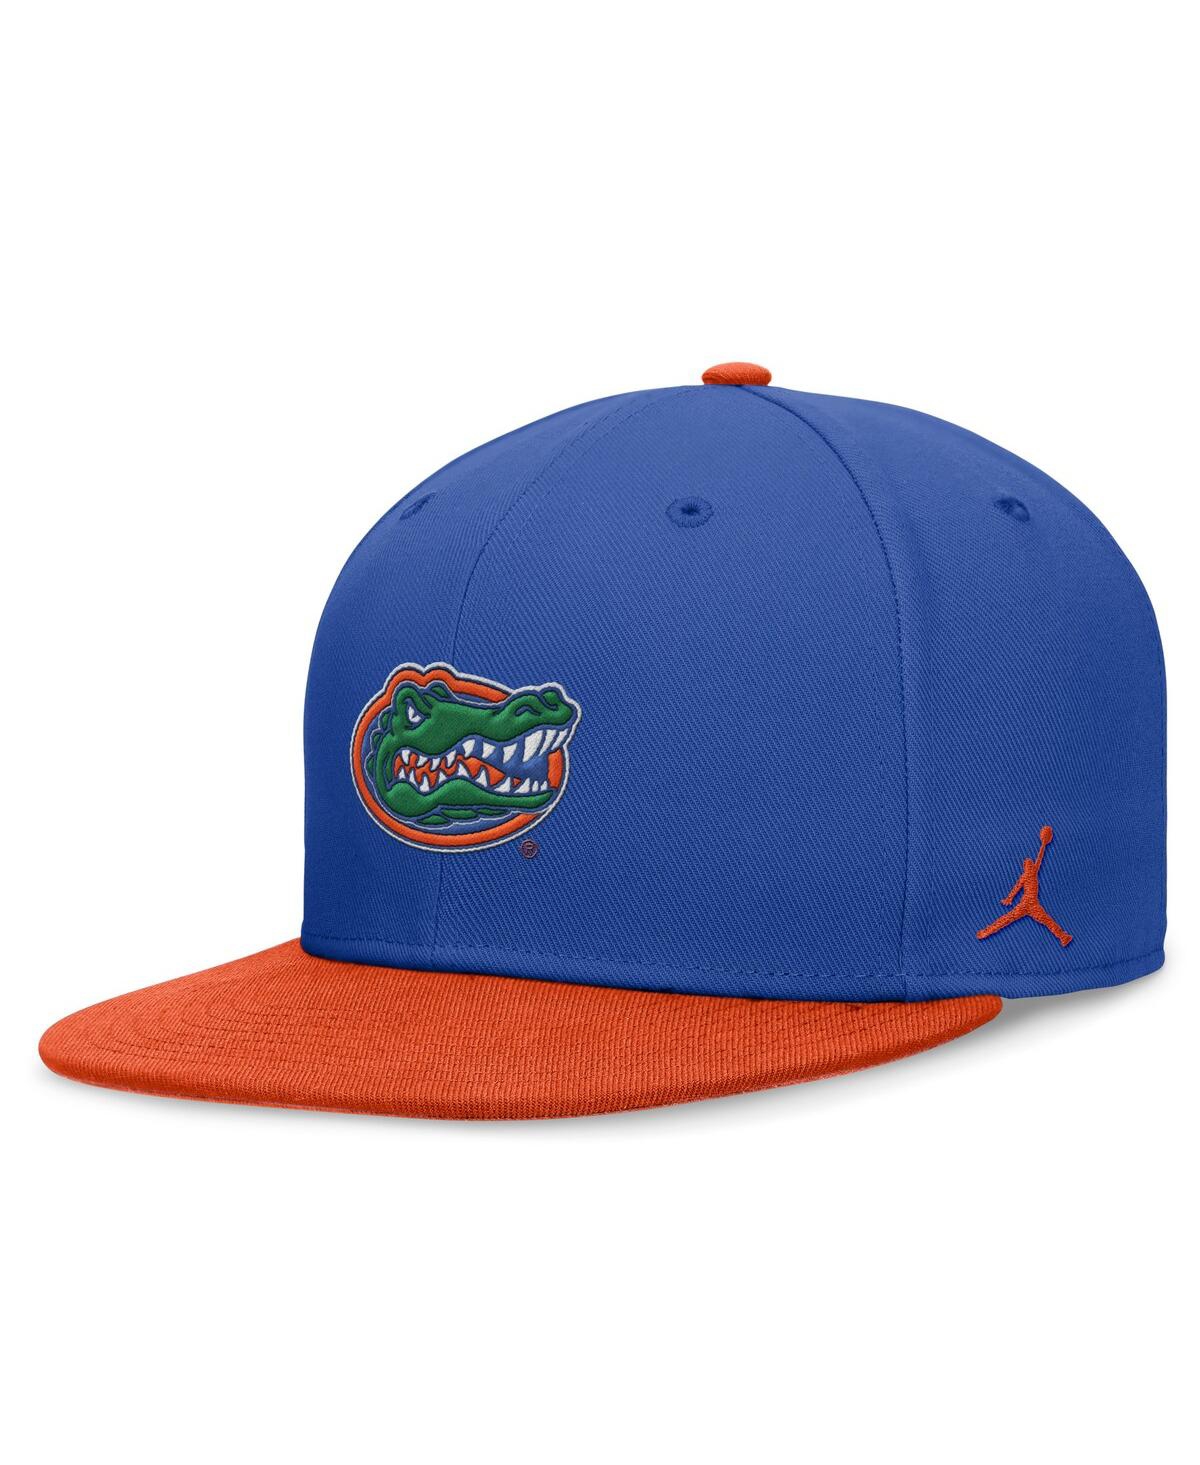 Men's Royal/Orange Florida Gators Team Logo Performance Fitted Hat - Royal, Orange